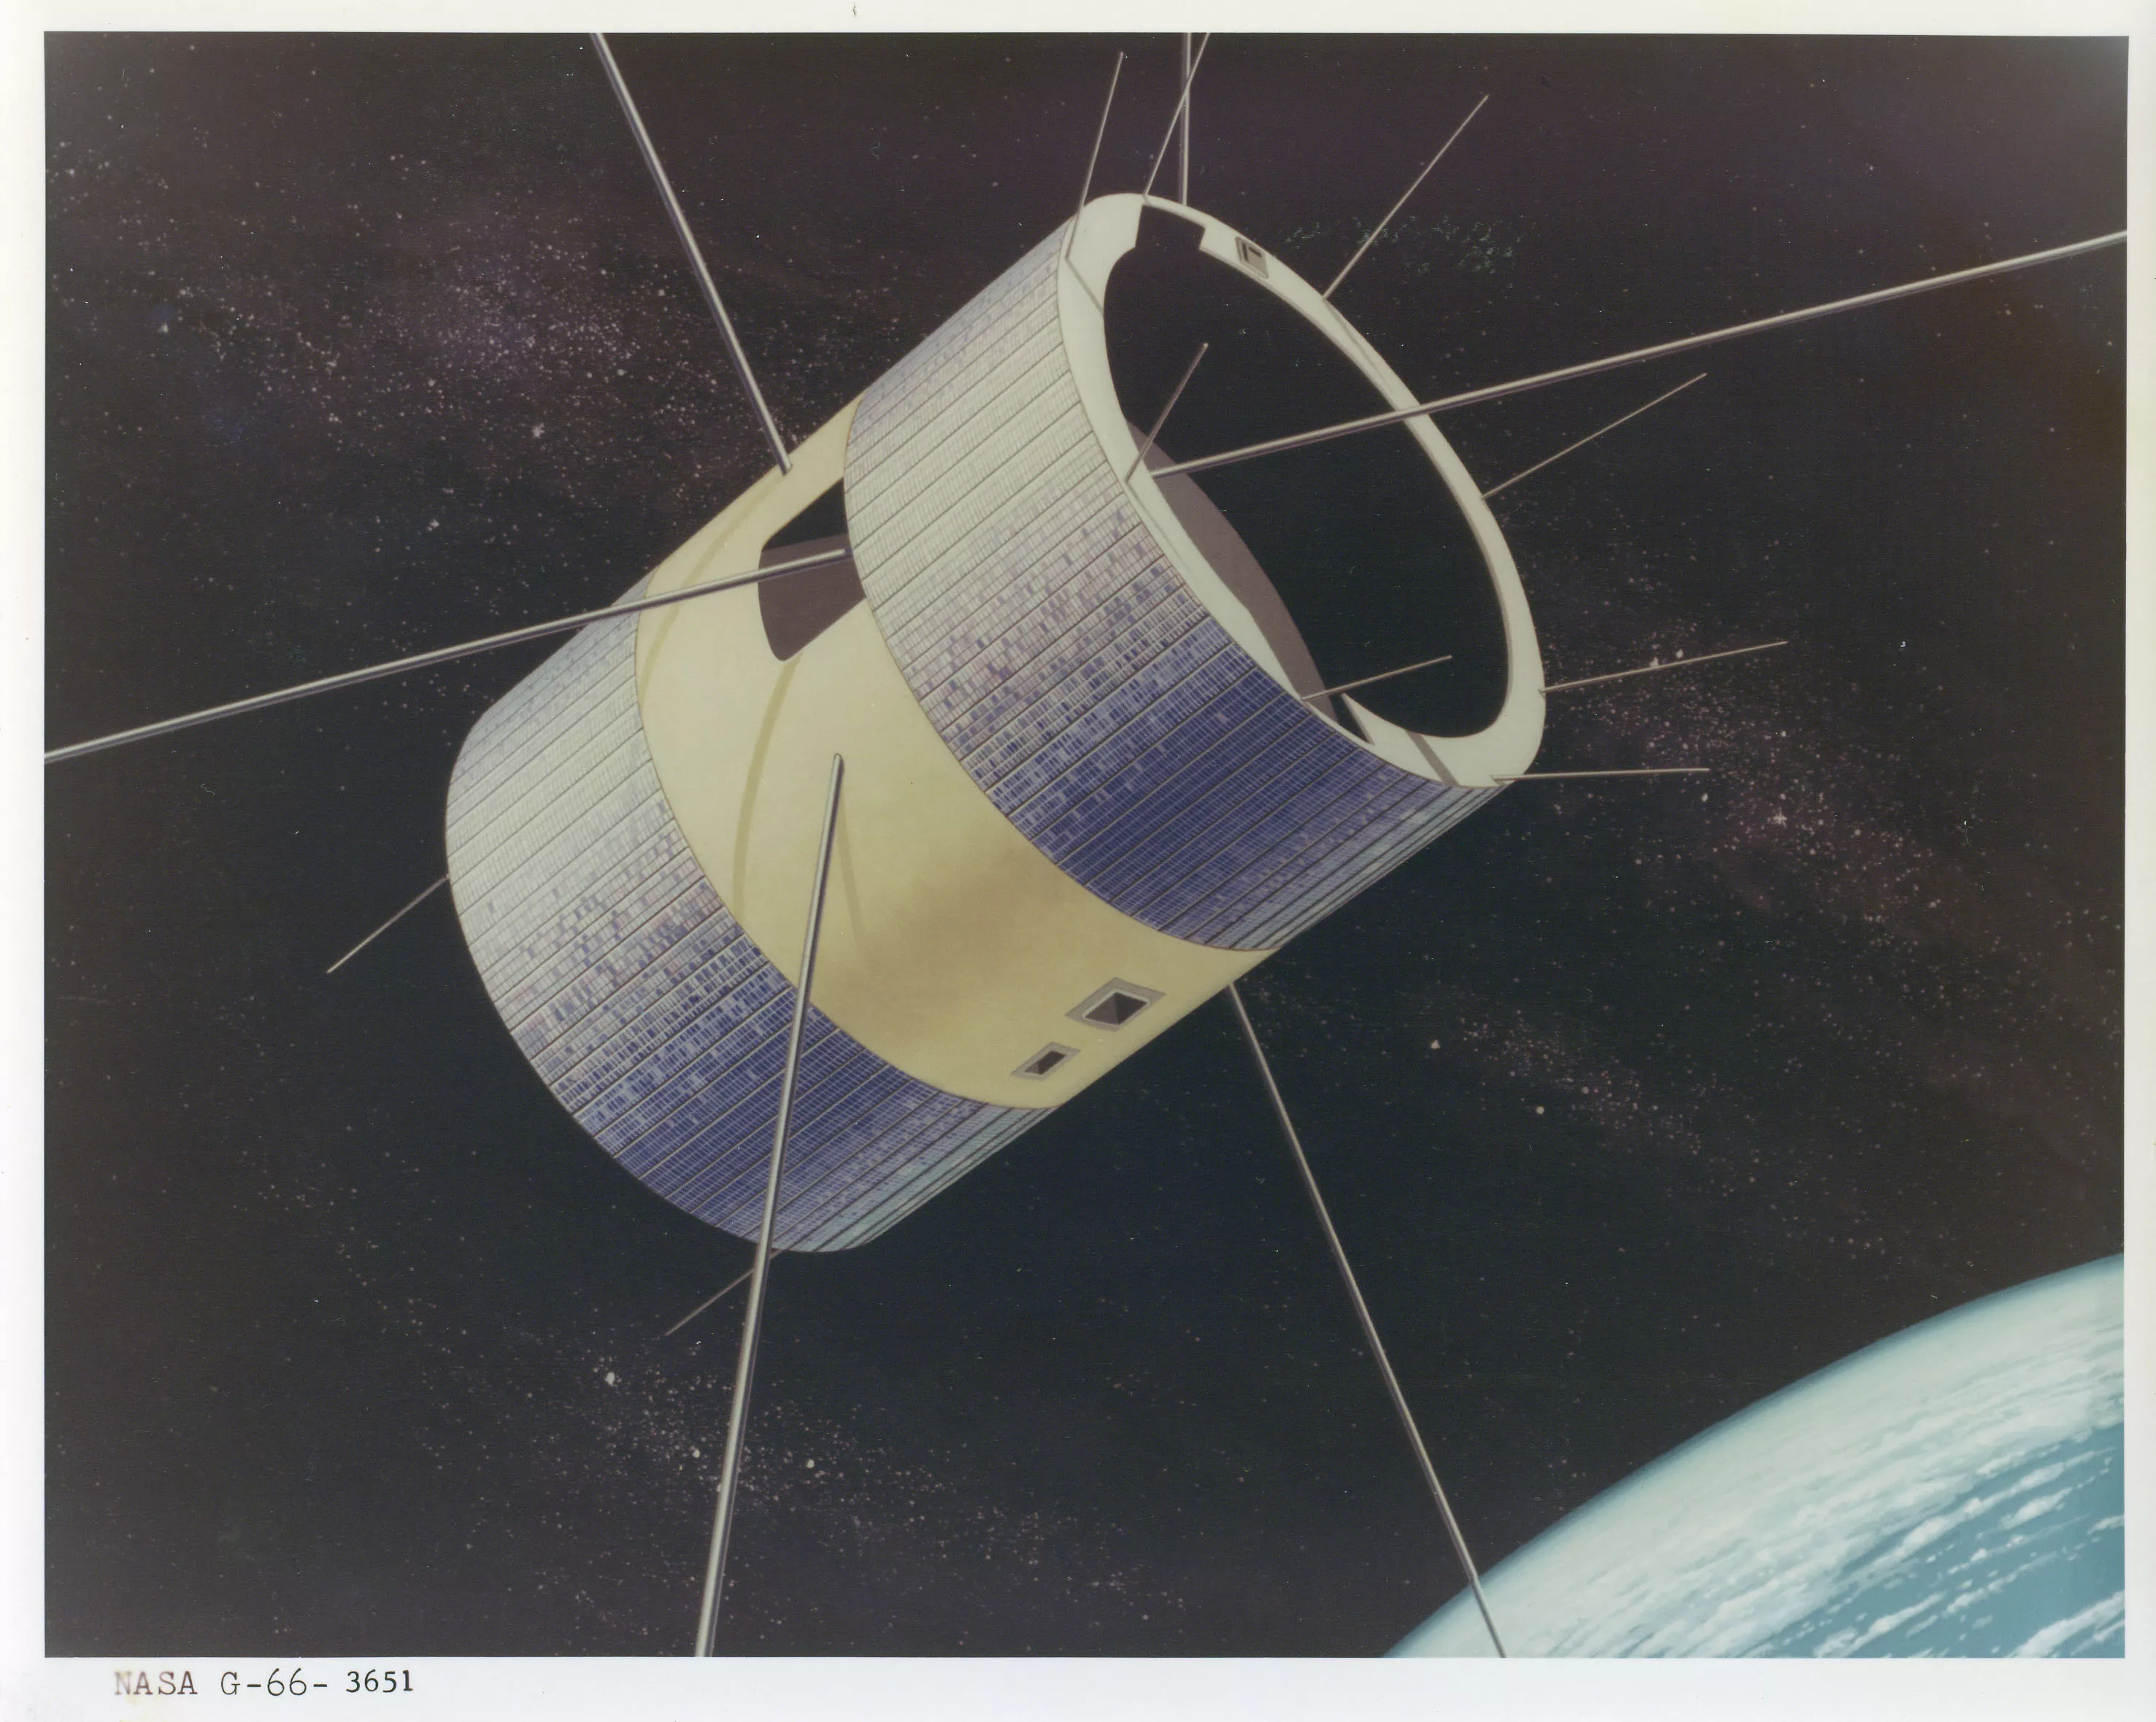 An artist's rendering of the ATS-1 spacecraft. Credit: NASA